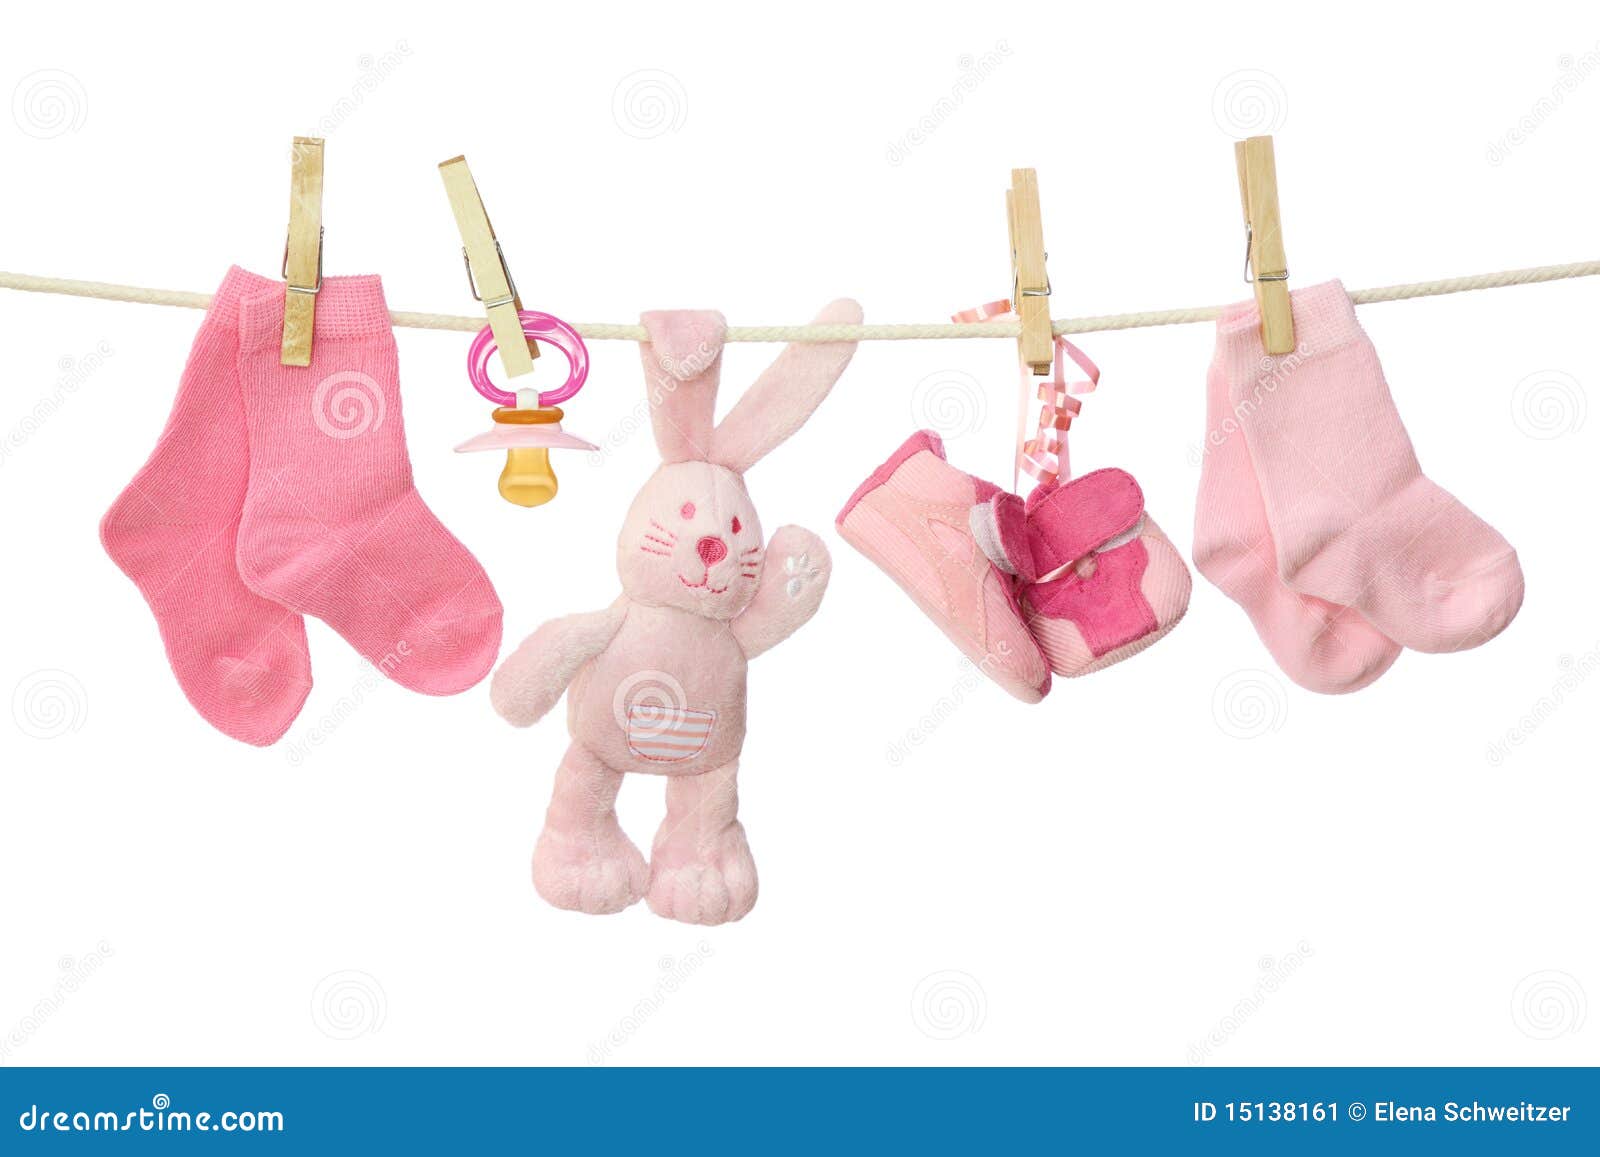 pink baby goods